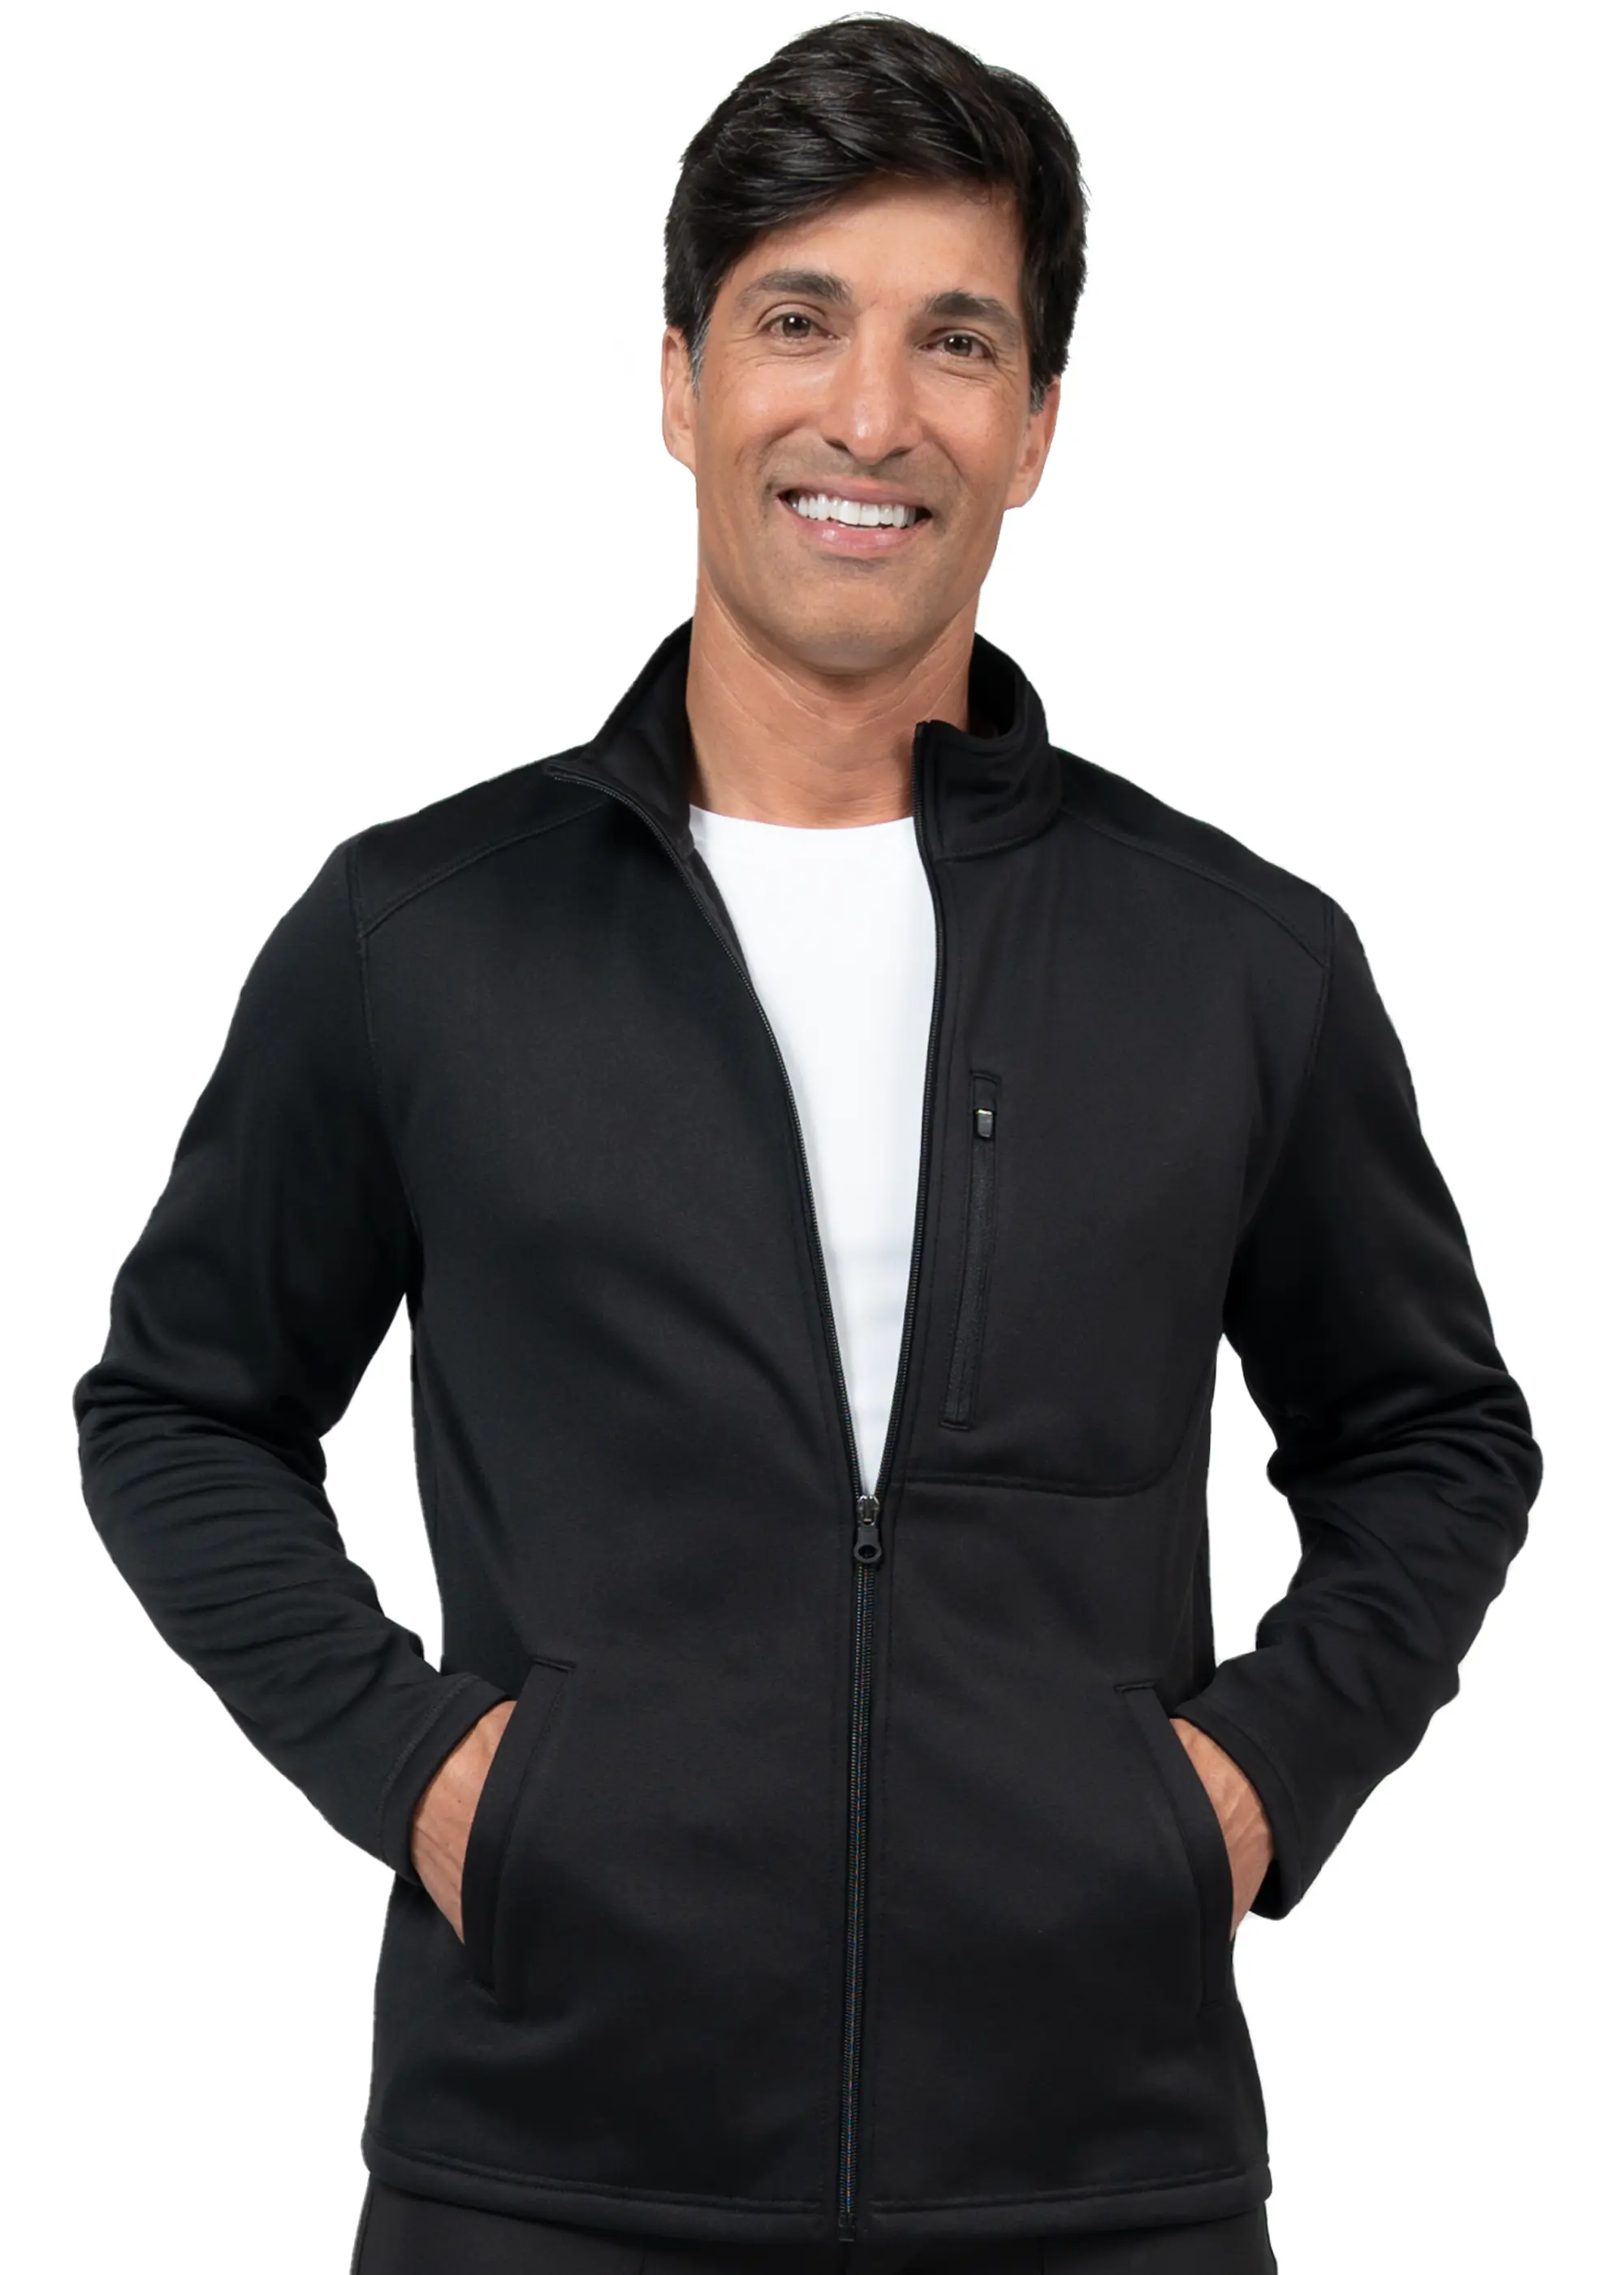 Brandon Bonded Fleece Jacket-Zavate Uniforms